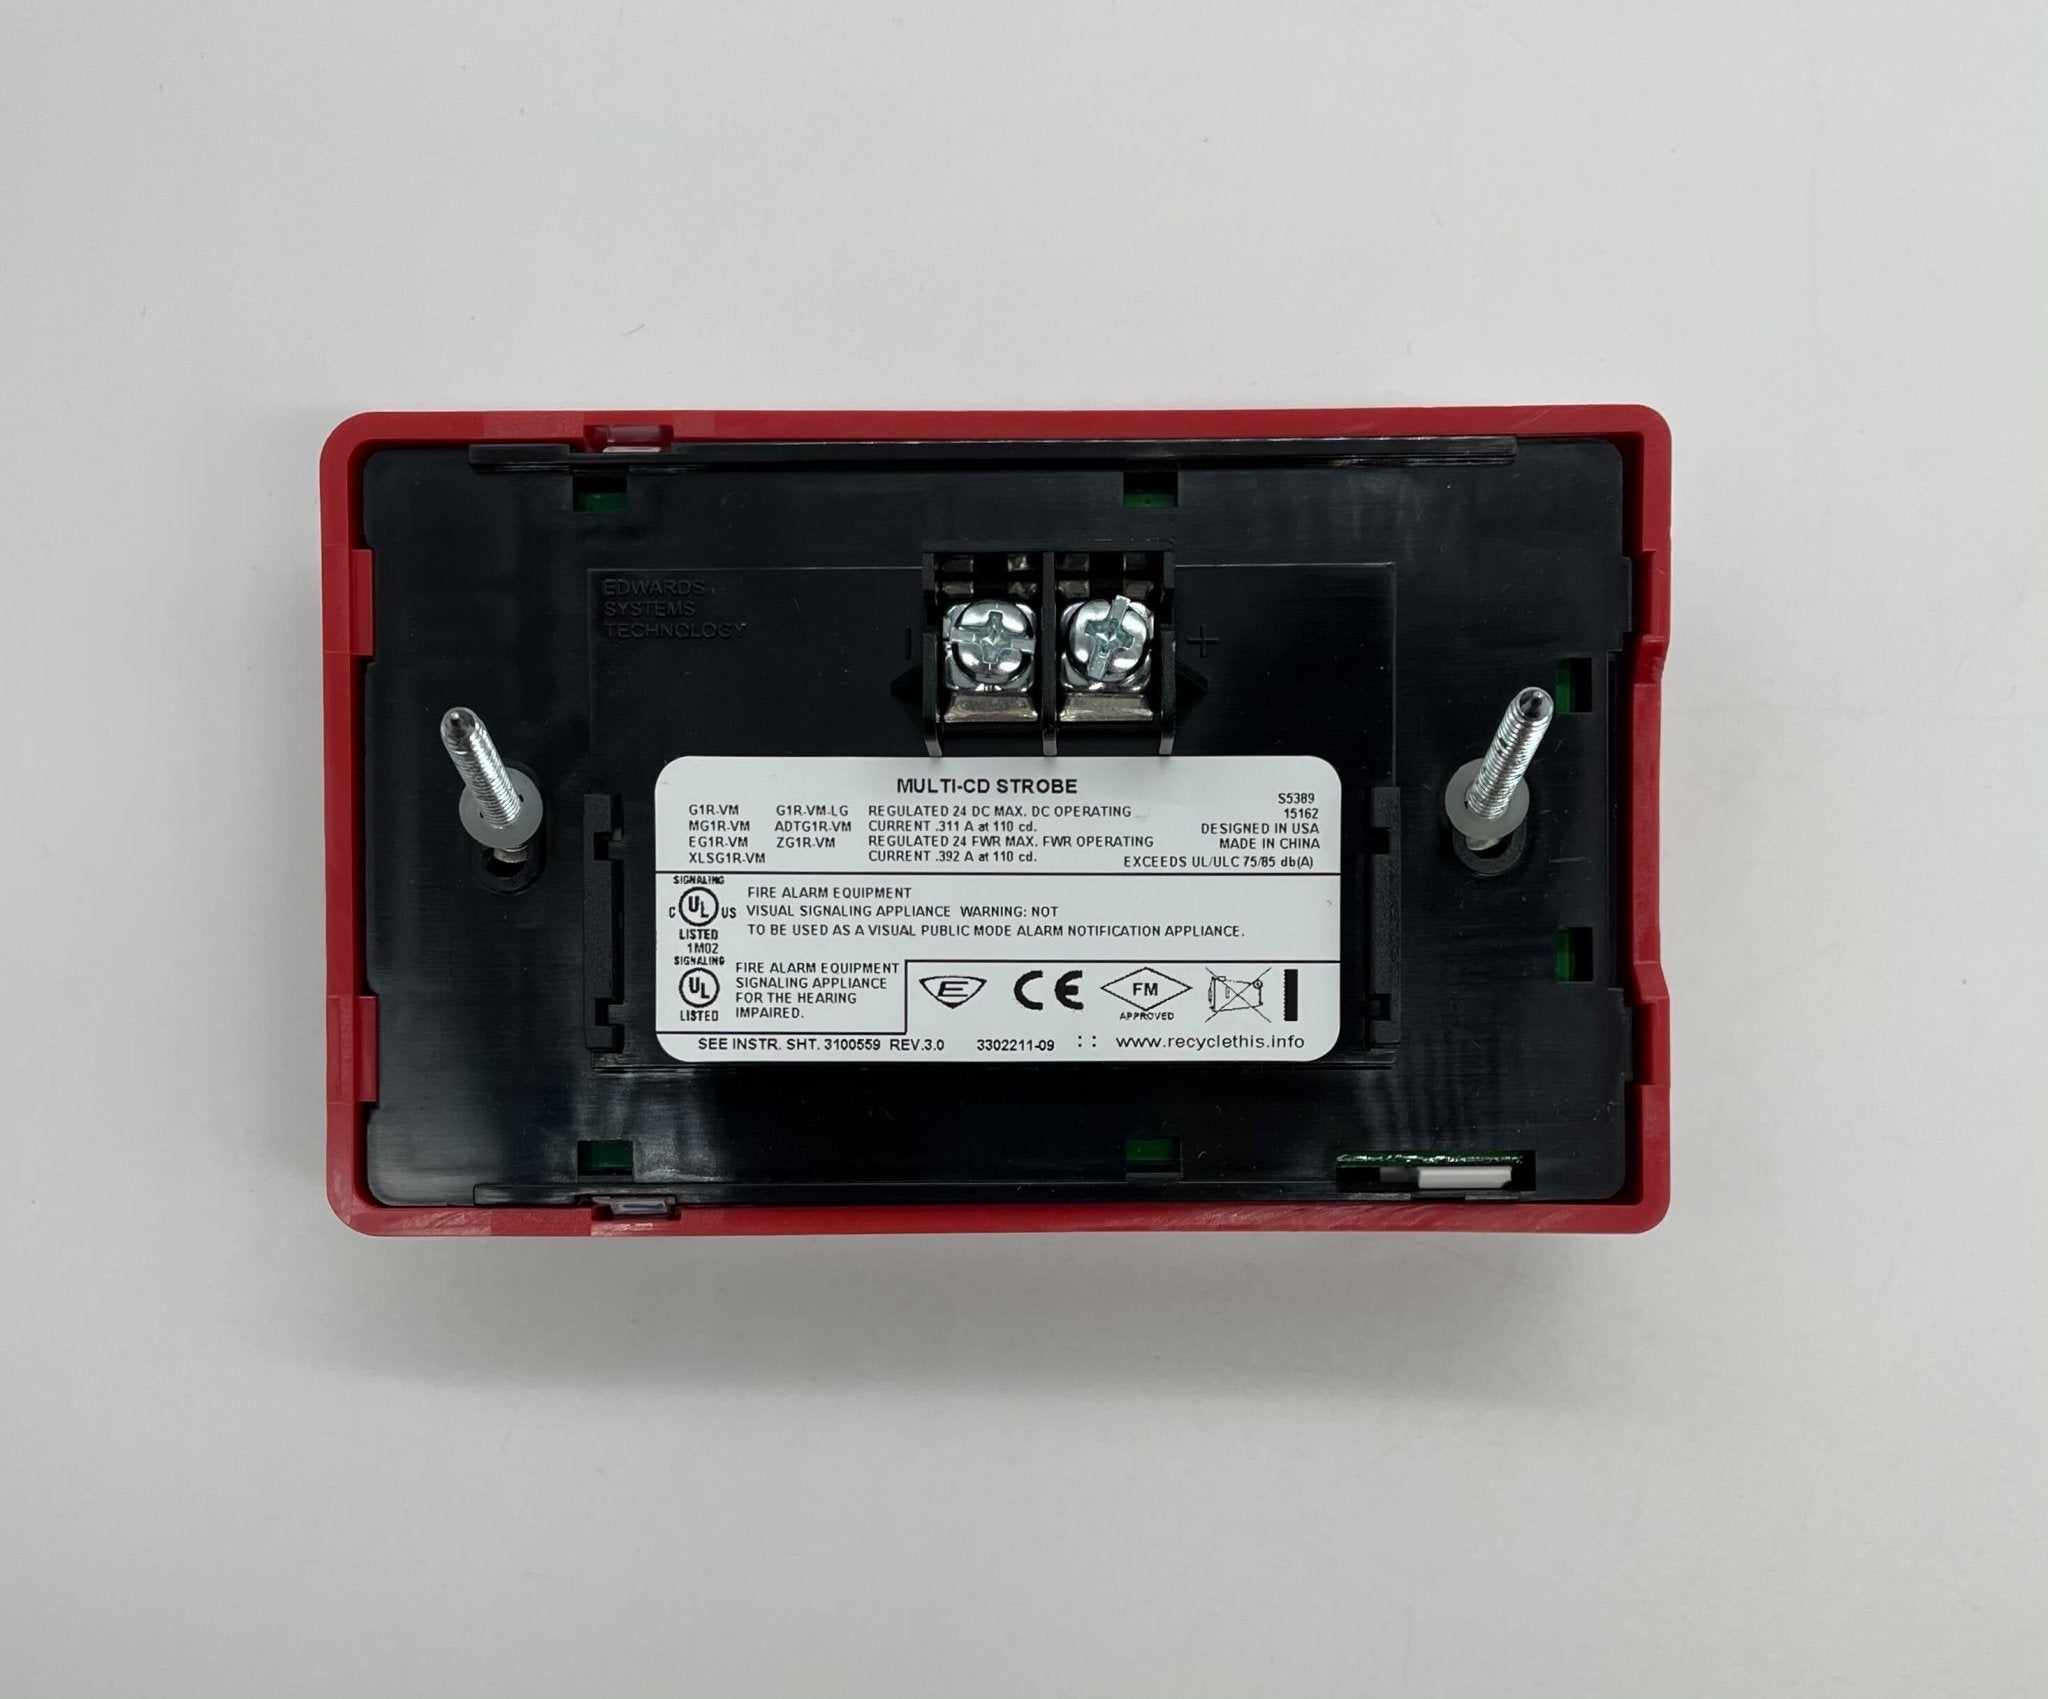 Edwards G1R-VM - The Fire Alarm Supplier